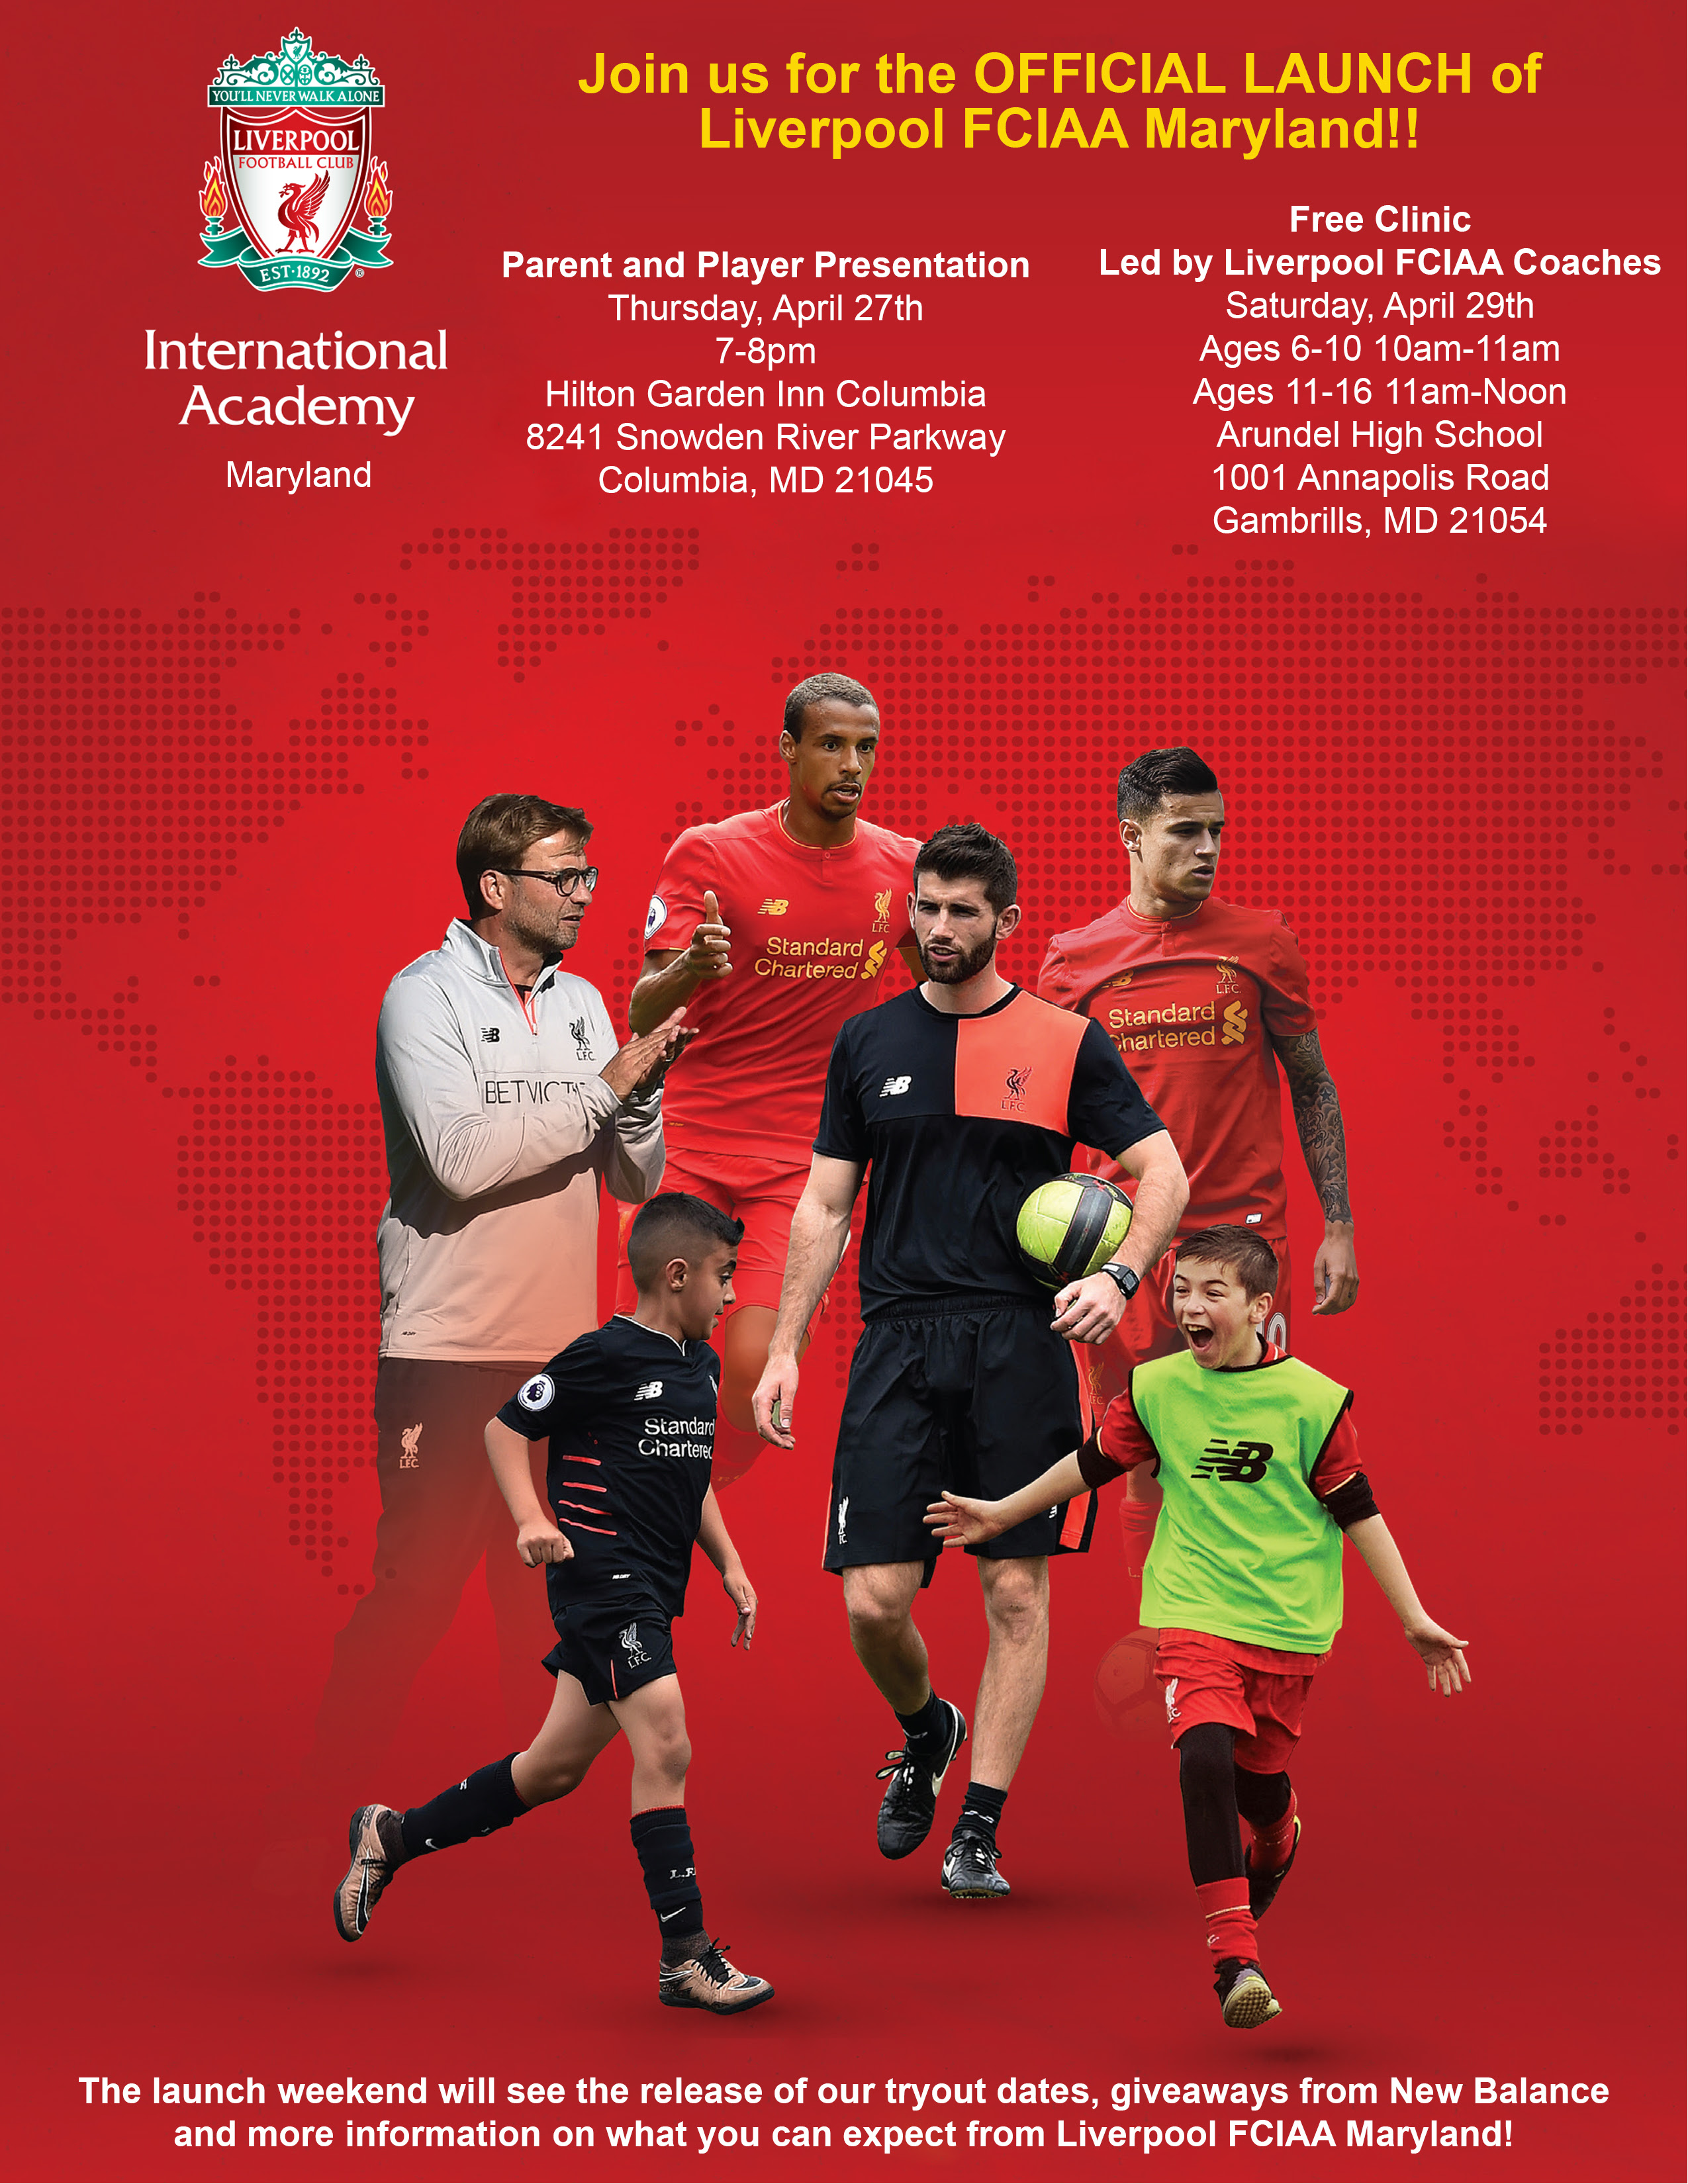 Liverpool Fciaa Maryland Launch Weekend Arundel Soccer Association